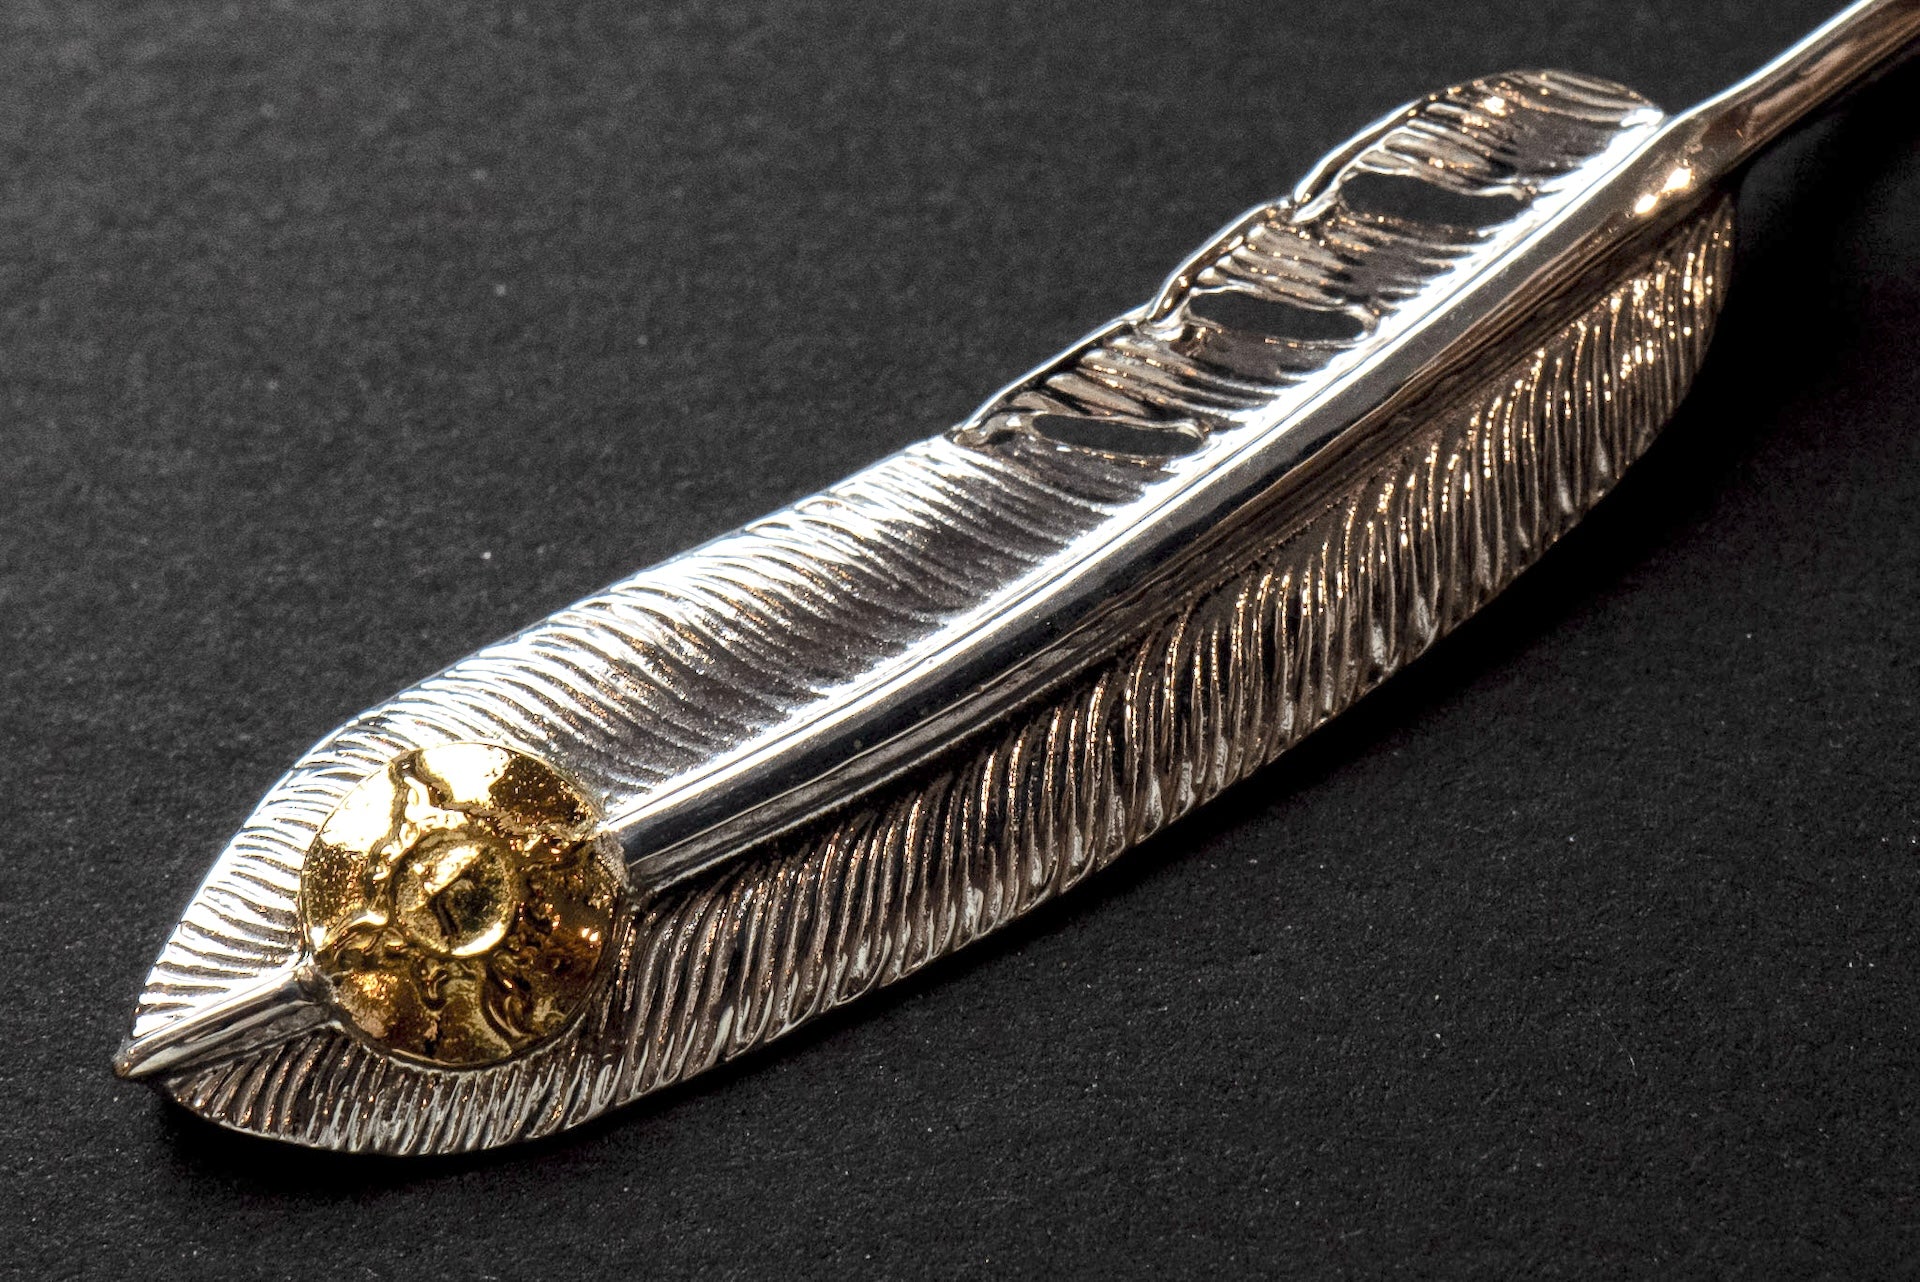 First Arrow's 18K Gold Sunburst Emblem "Medium Feather" Silver Pendant (P-520)